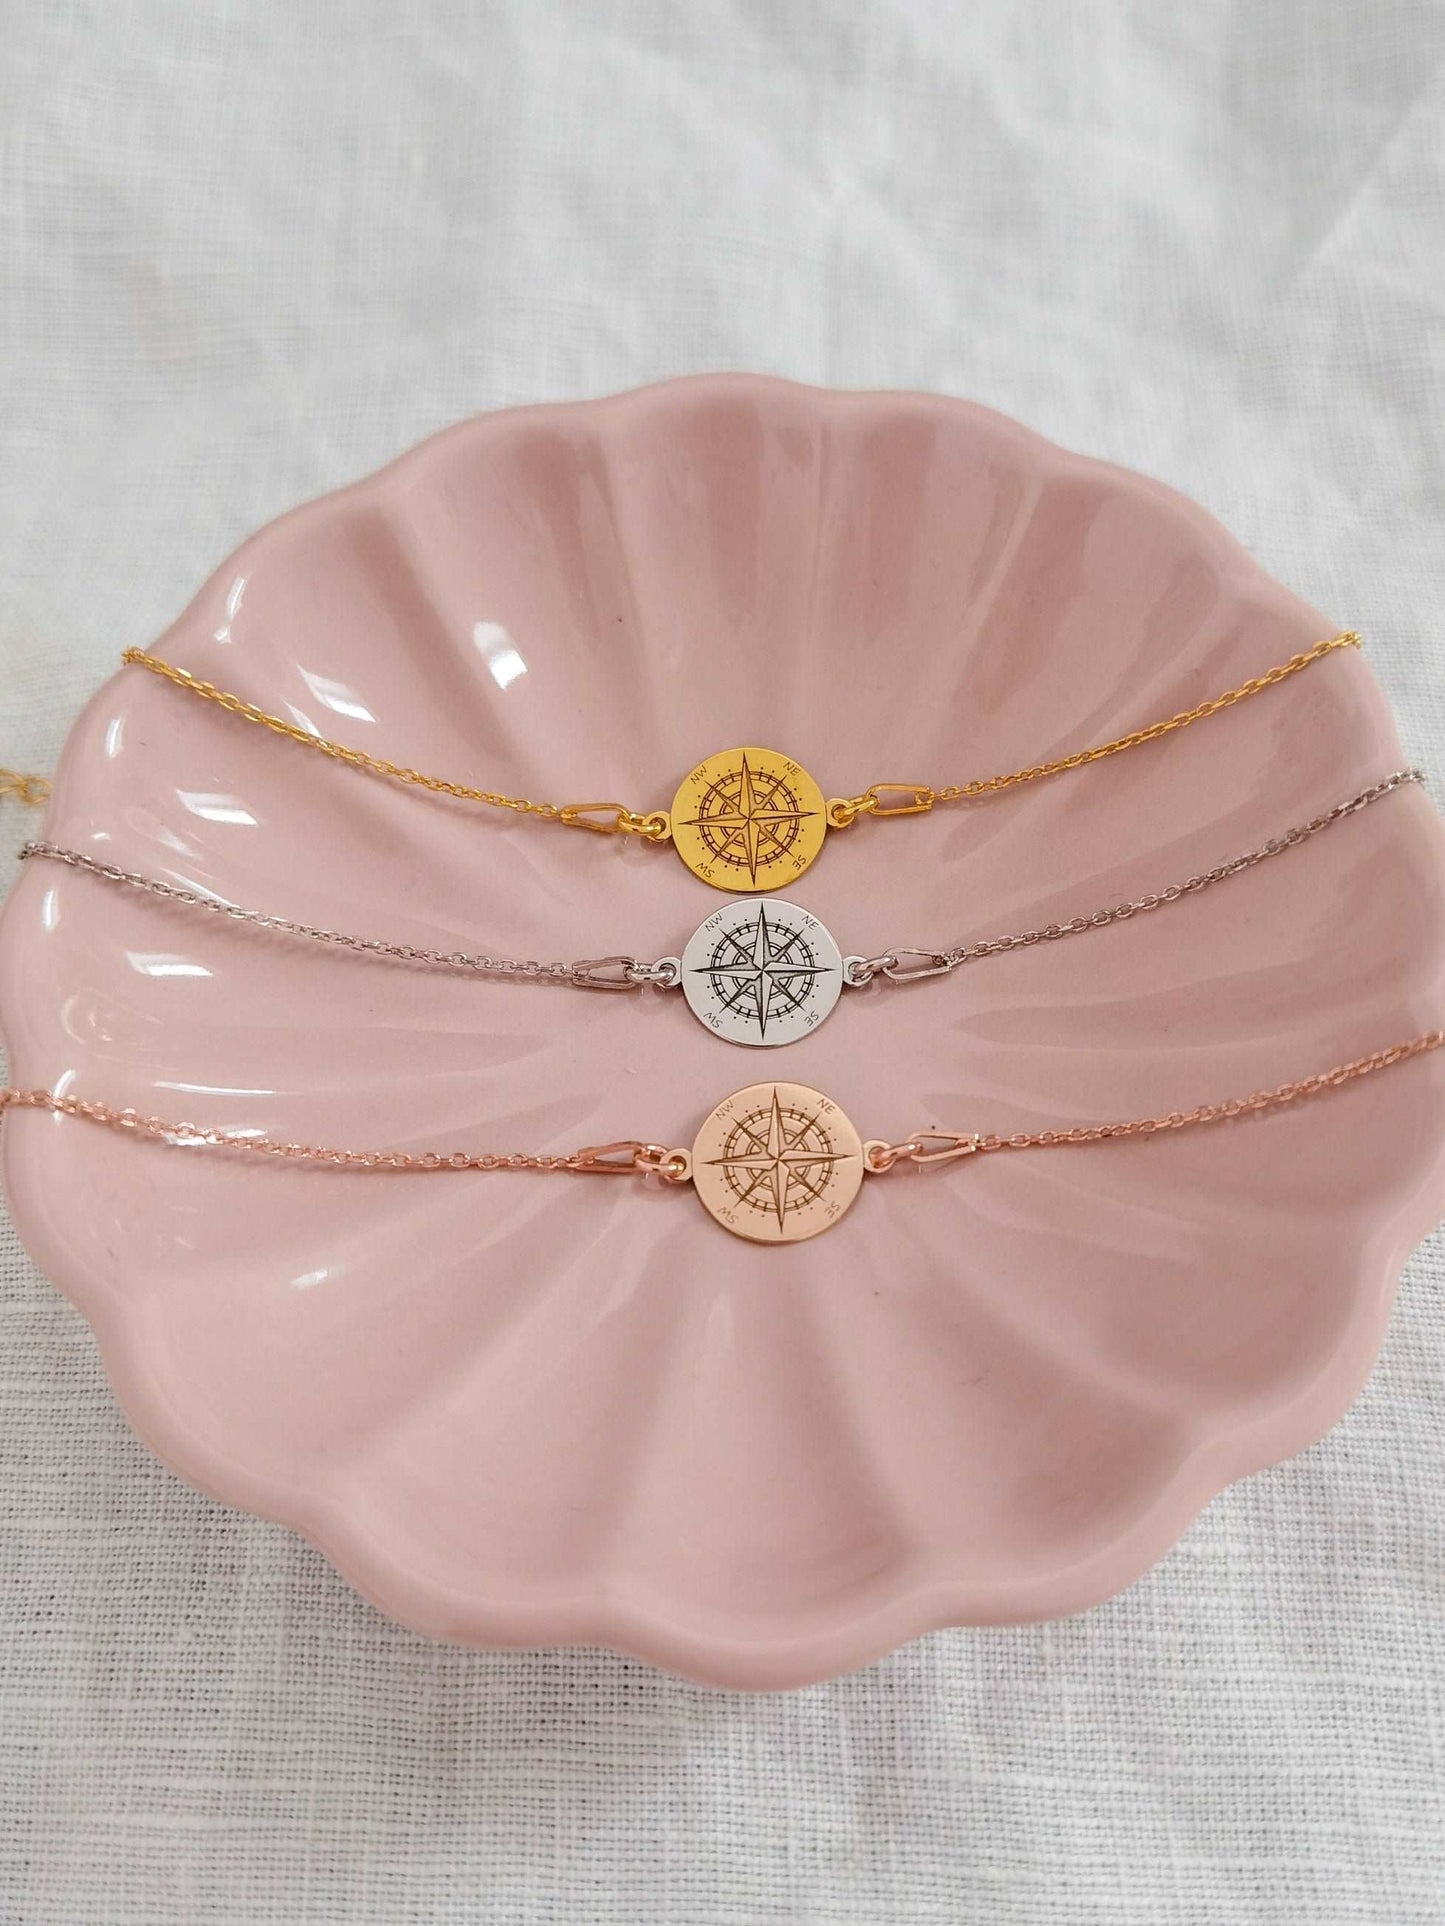 Kompass Armband in roségold, silber und gold in rosa Schmuckschale